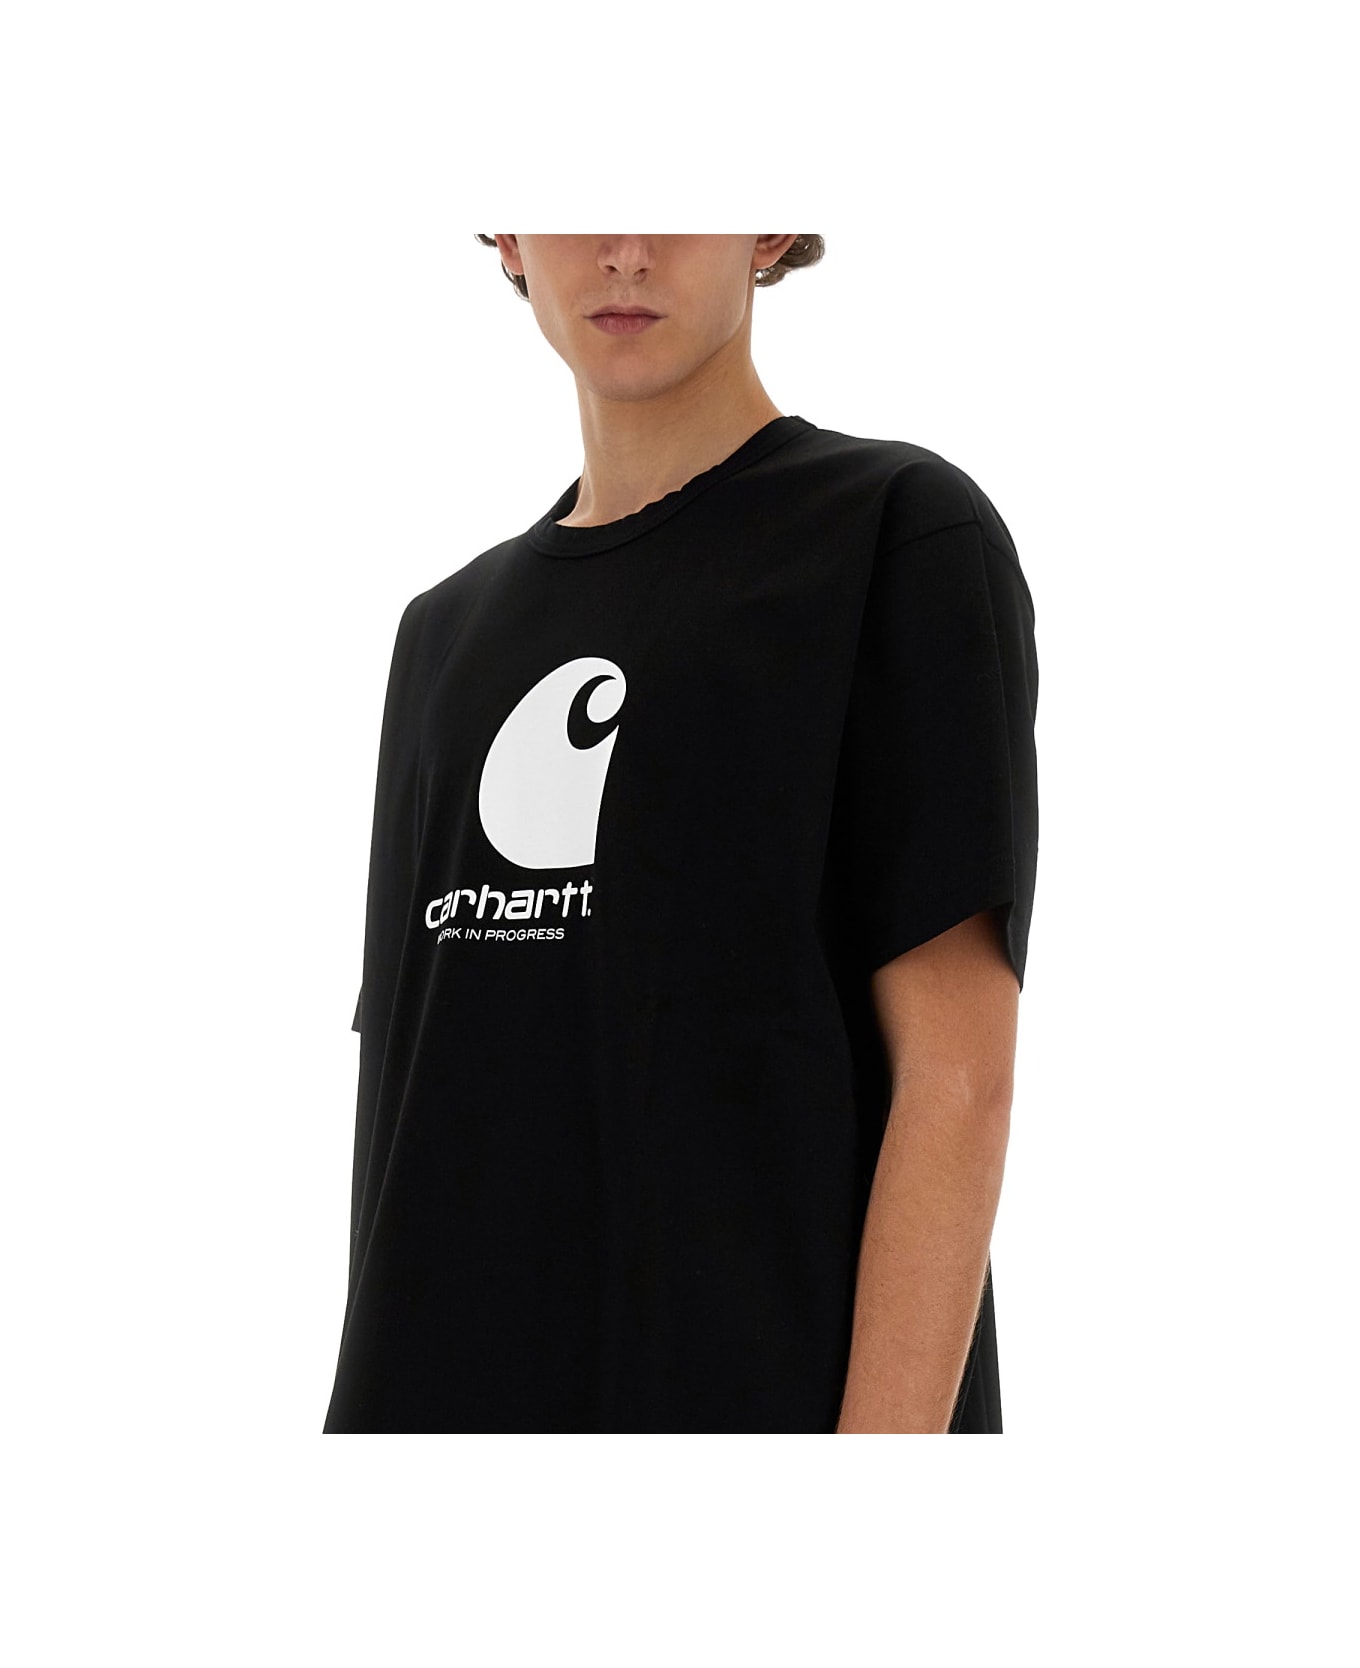 Junya Watanabe Man X Carhartt T-shirt - BLACK シャツ